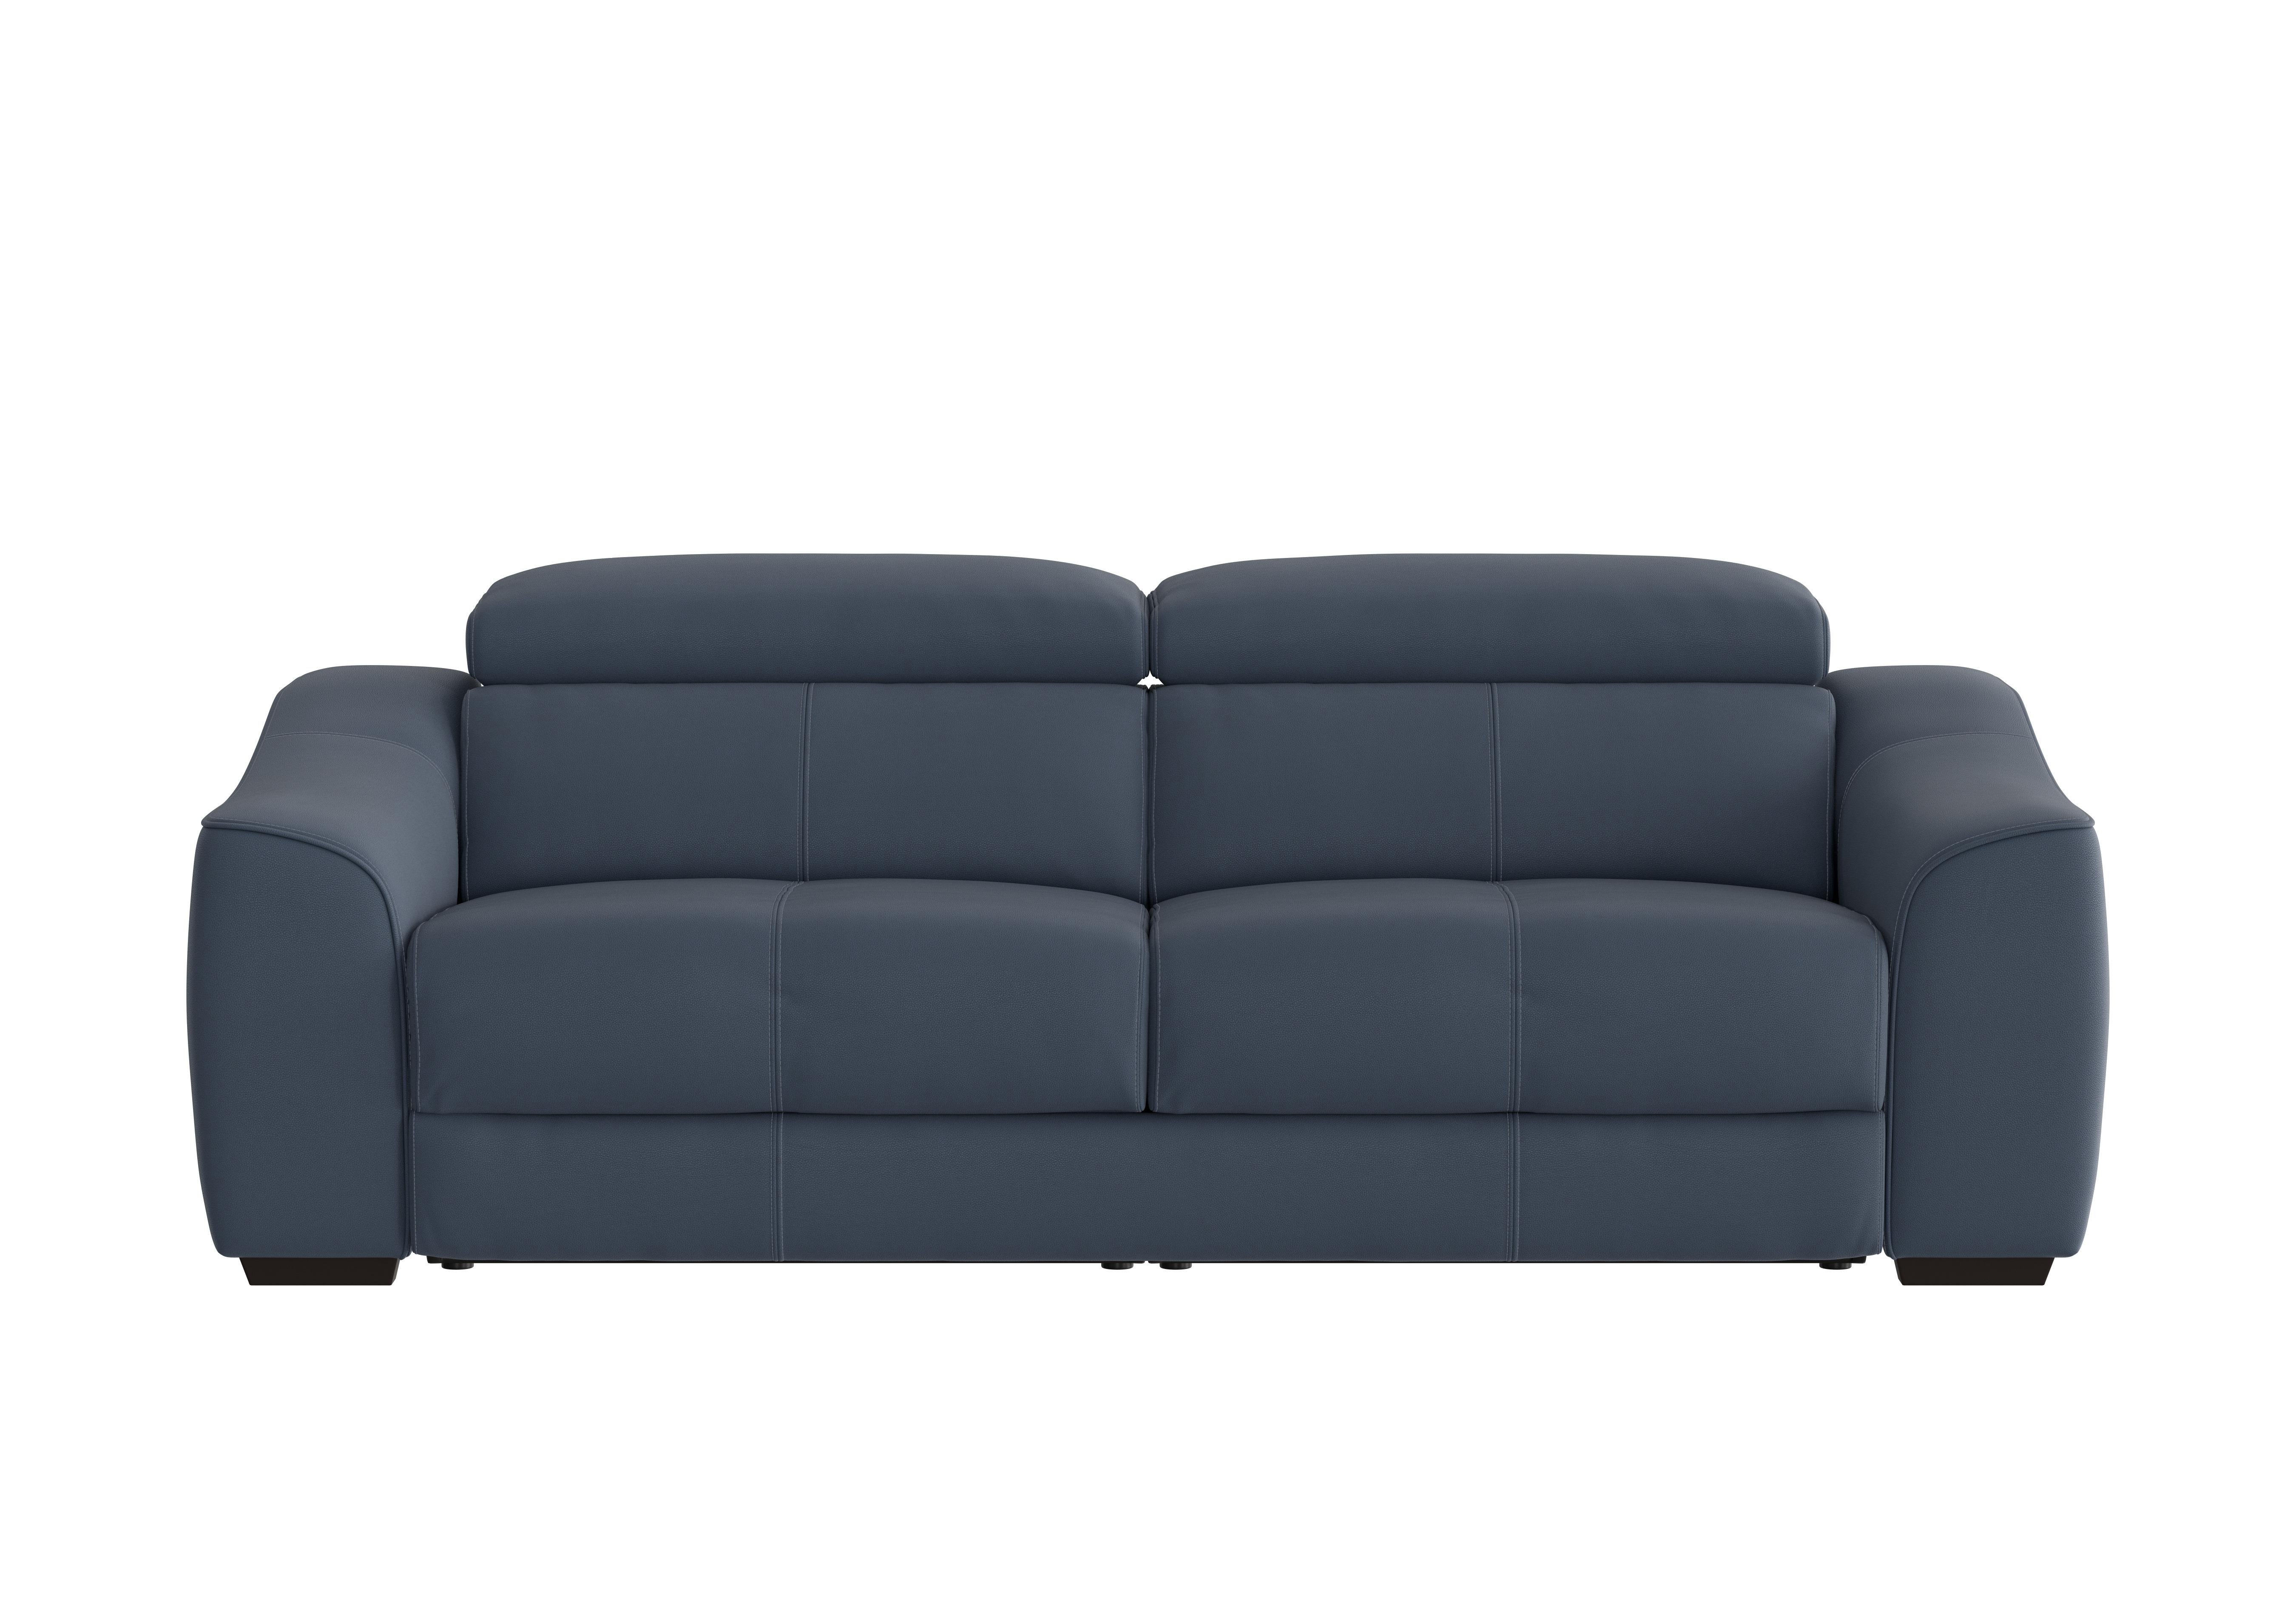 Elixir 3 Seater Leather Sofa Bed in Bv-313e Ocean Blue on Furniture Village